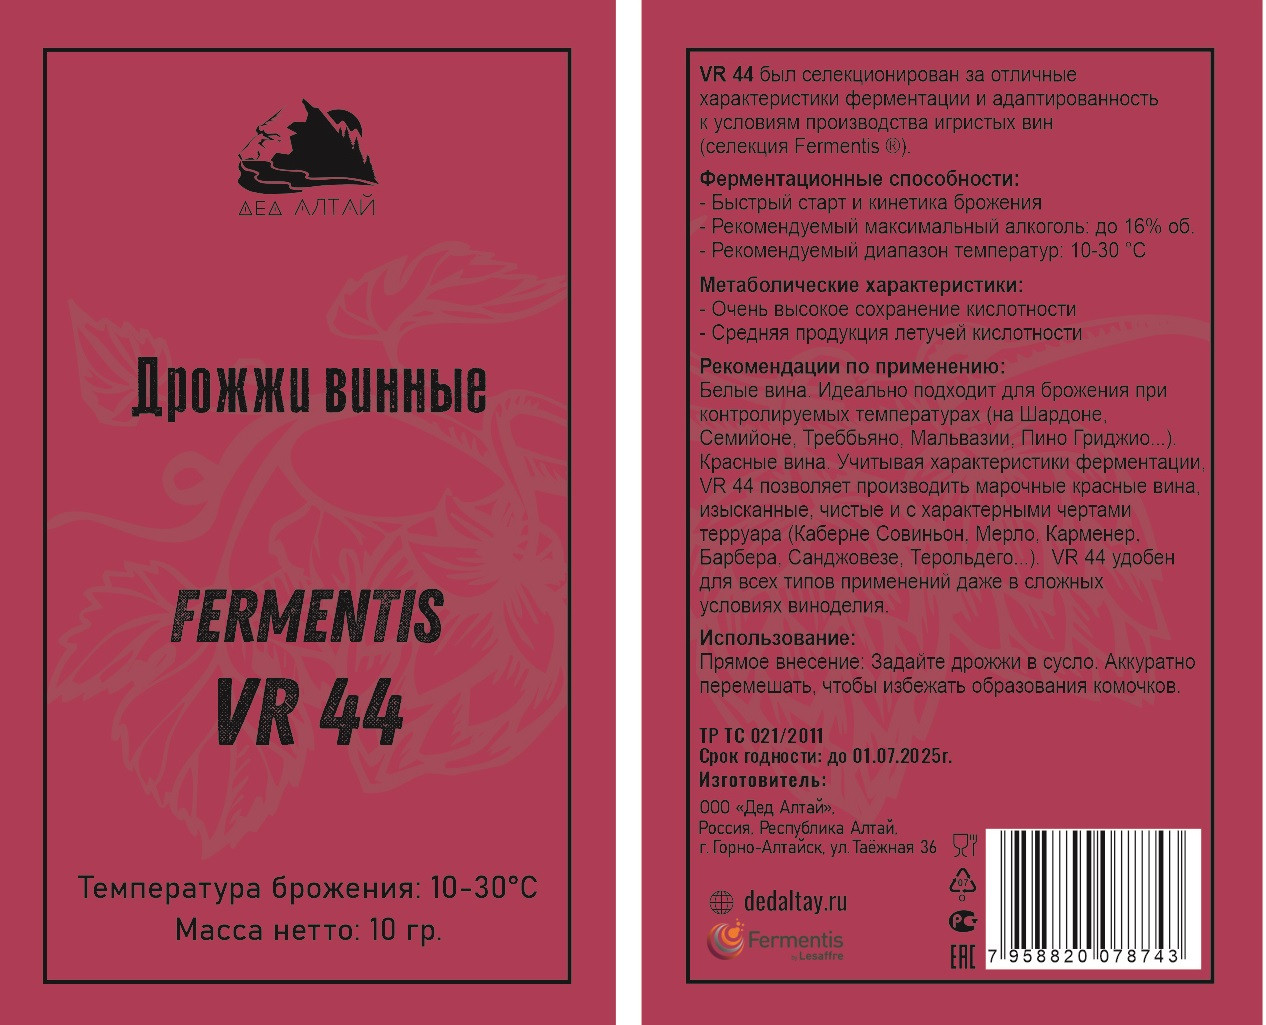 Дрожжи винные "Fermentis VR 44" (Дед Алтай)